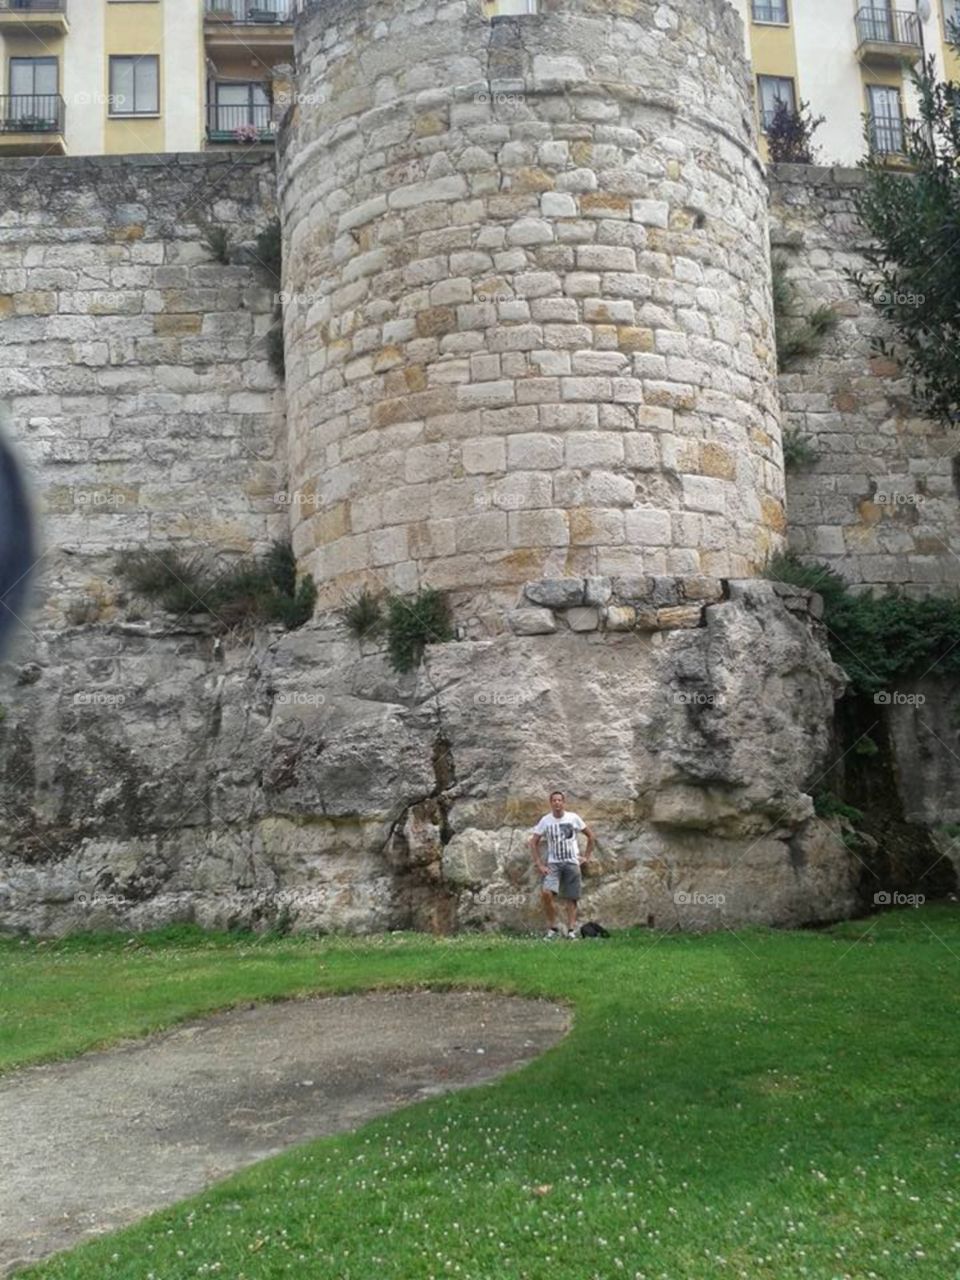 Zamora's ancient defending wall